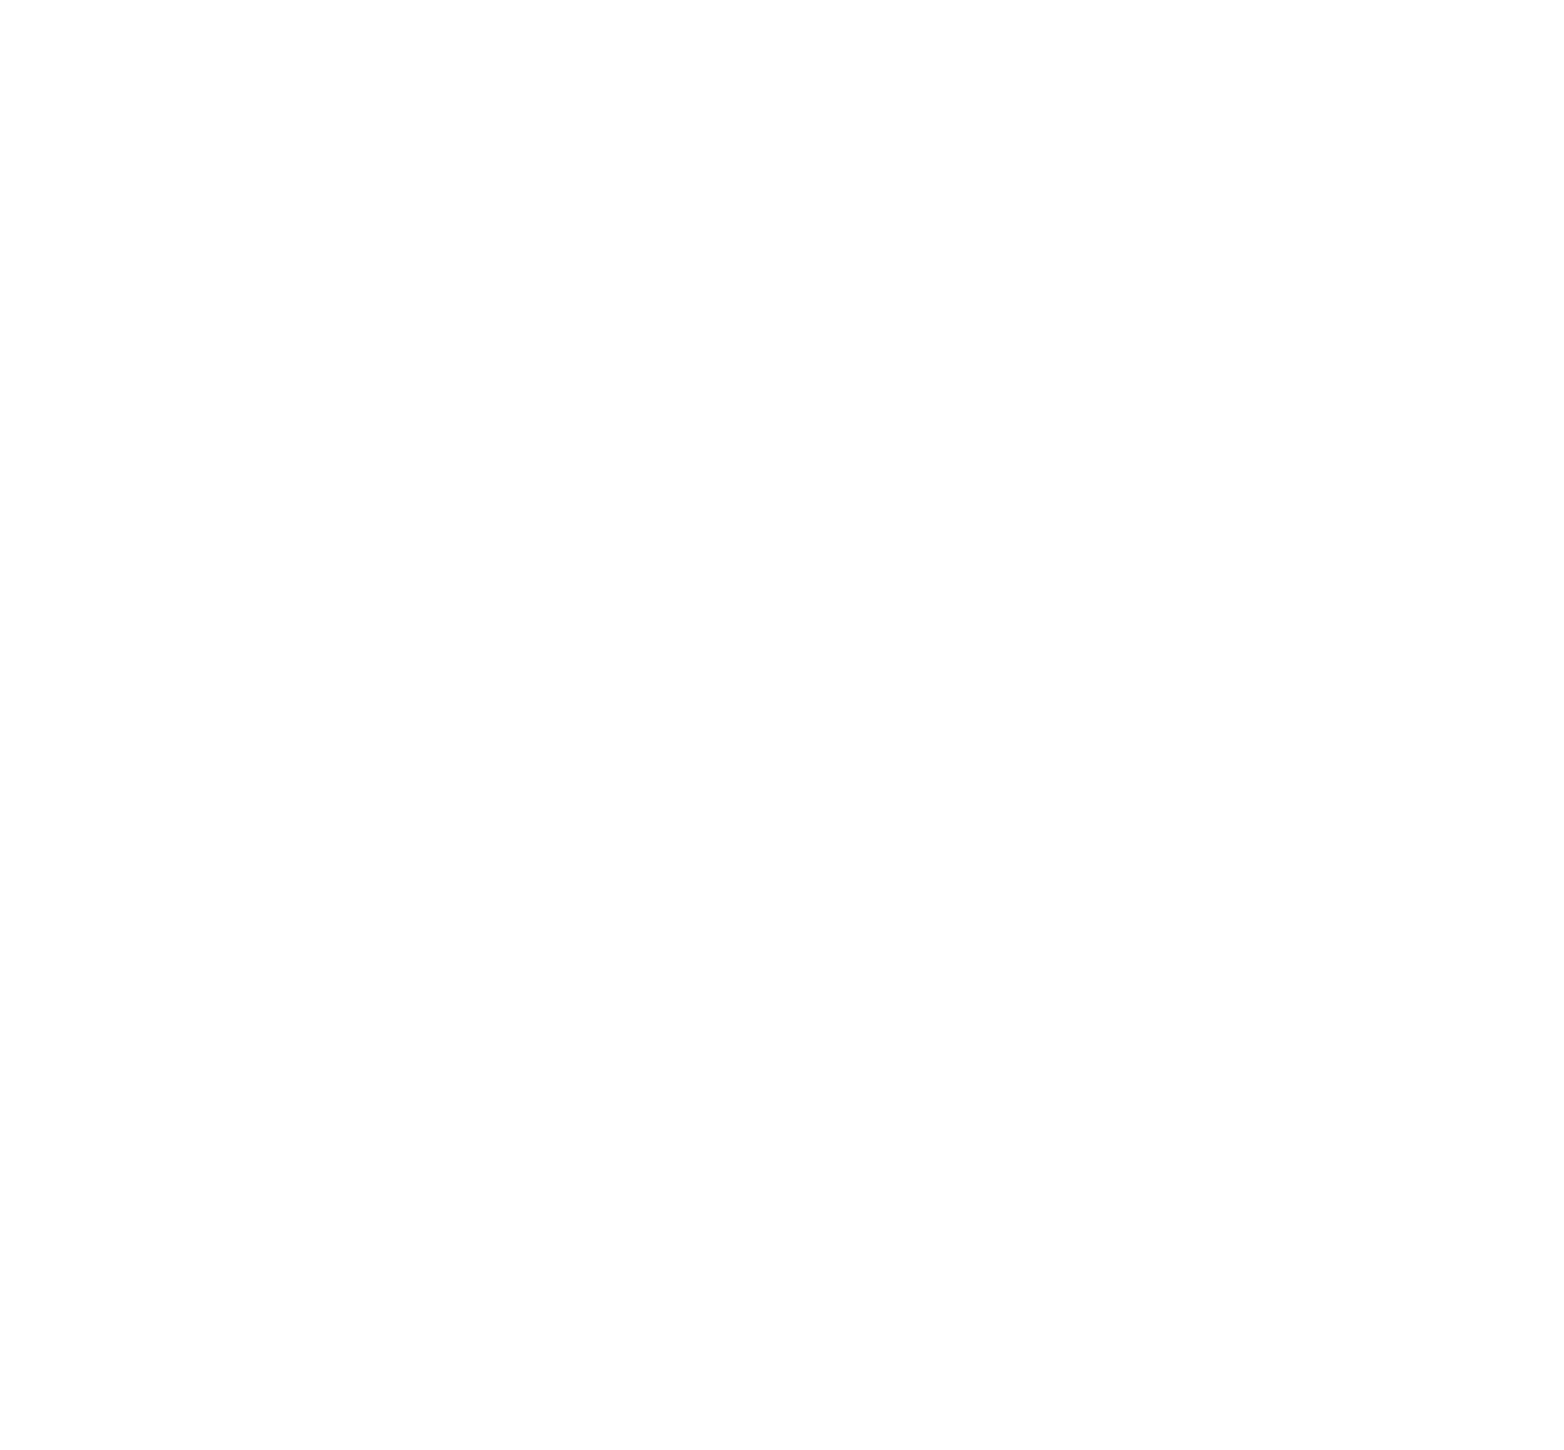 Pan Pacific International Holdings logo pour fonds sombres (PNG transparent)